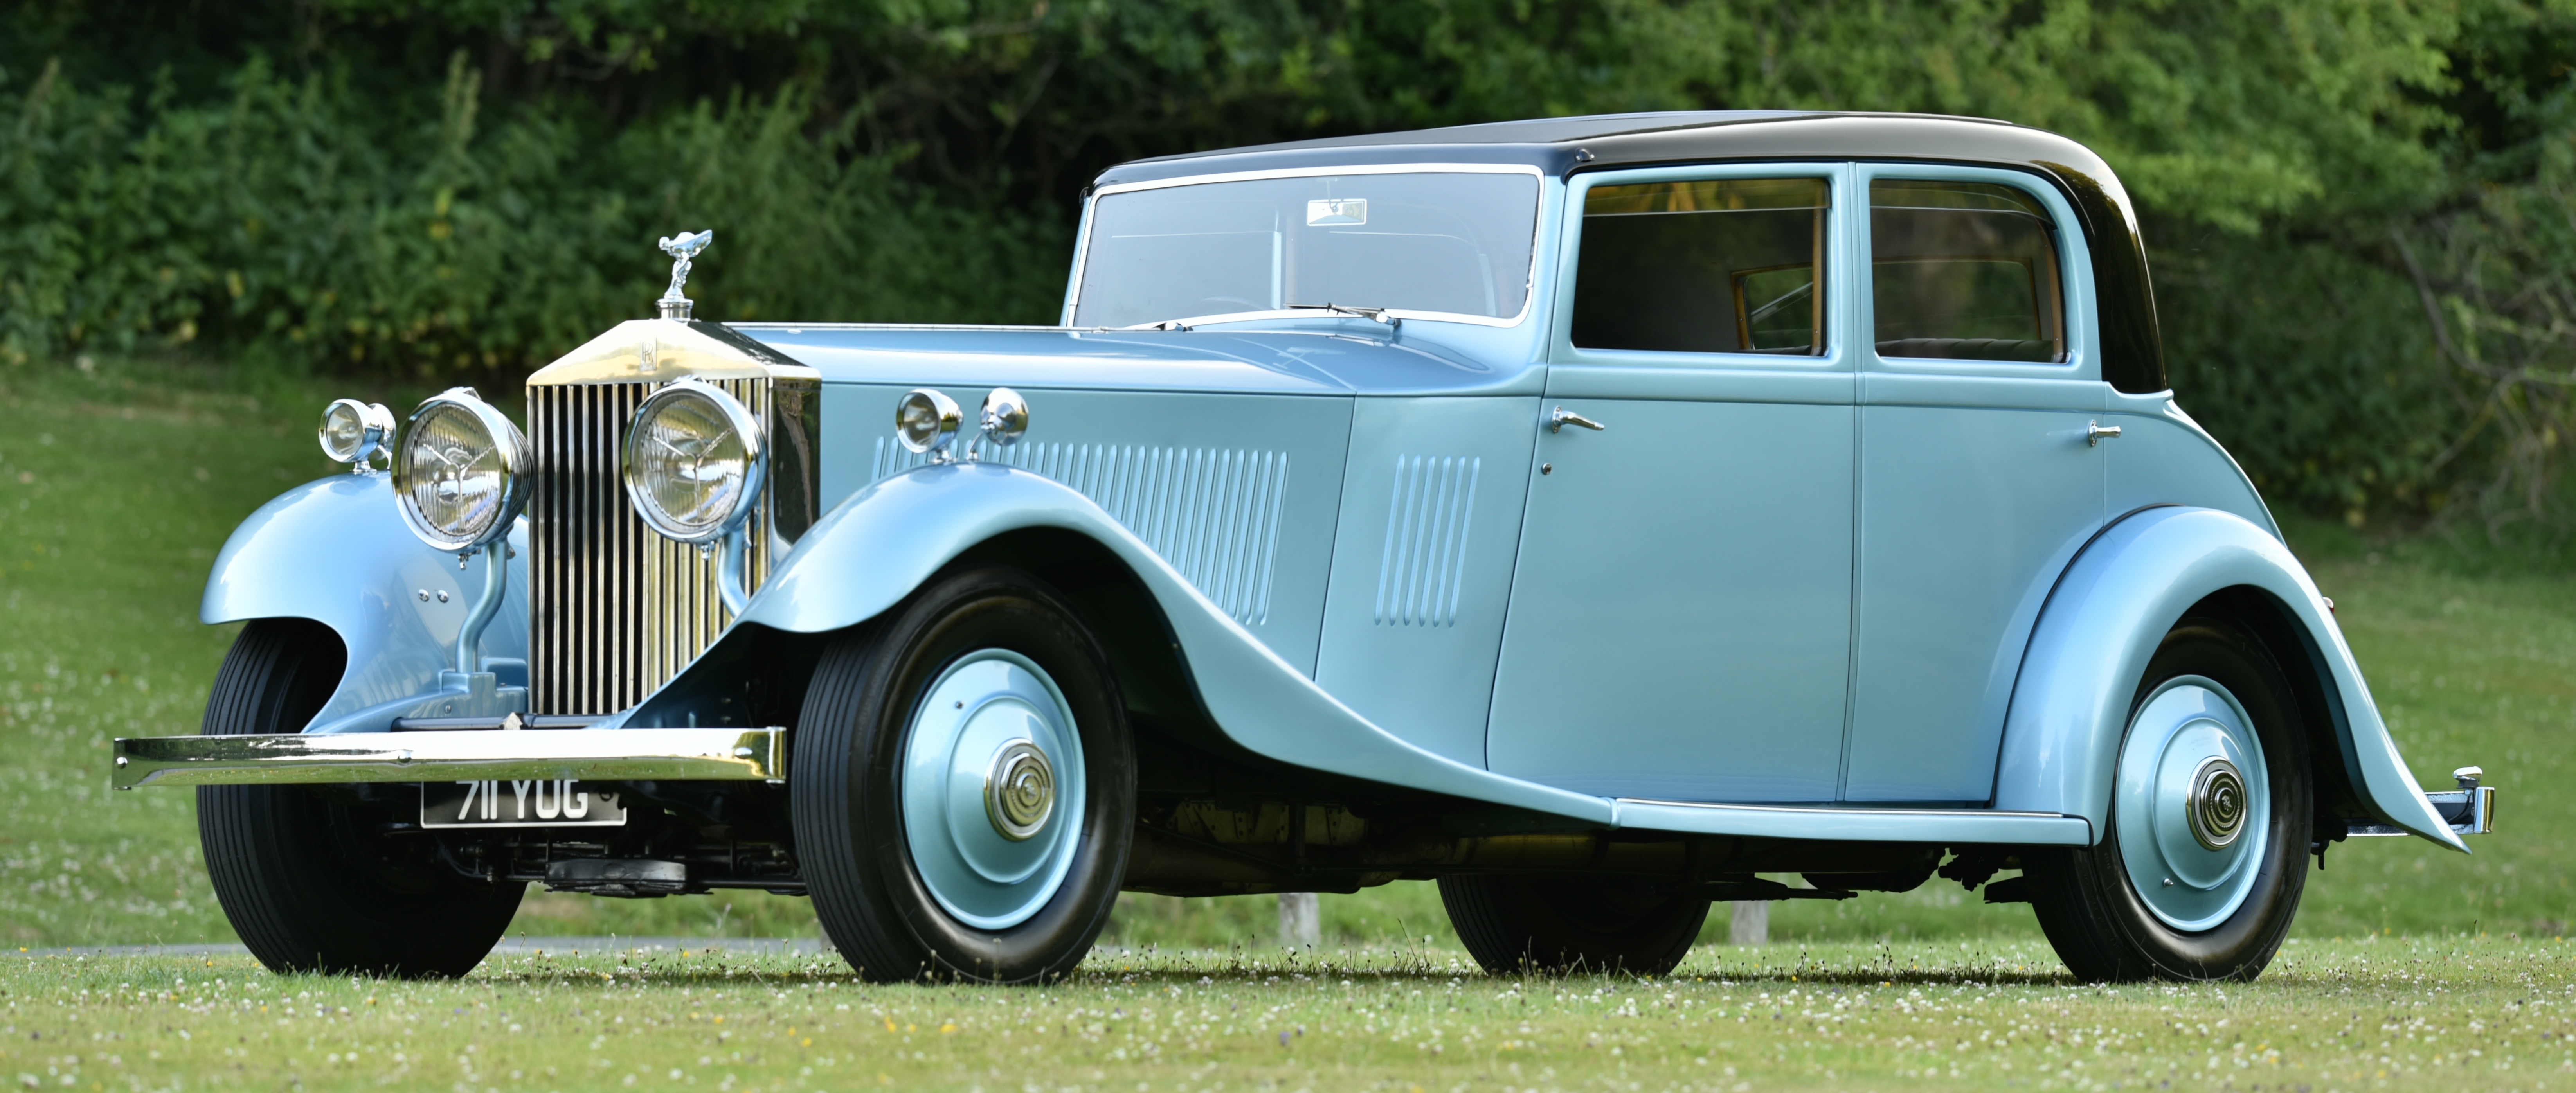 1933 Rolls_Royce_Phantom_II_Continental_711YUG_5